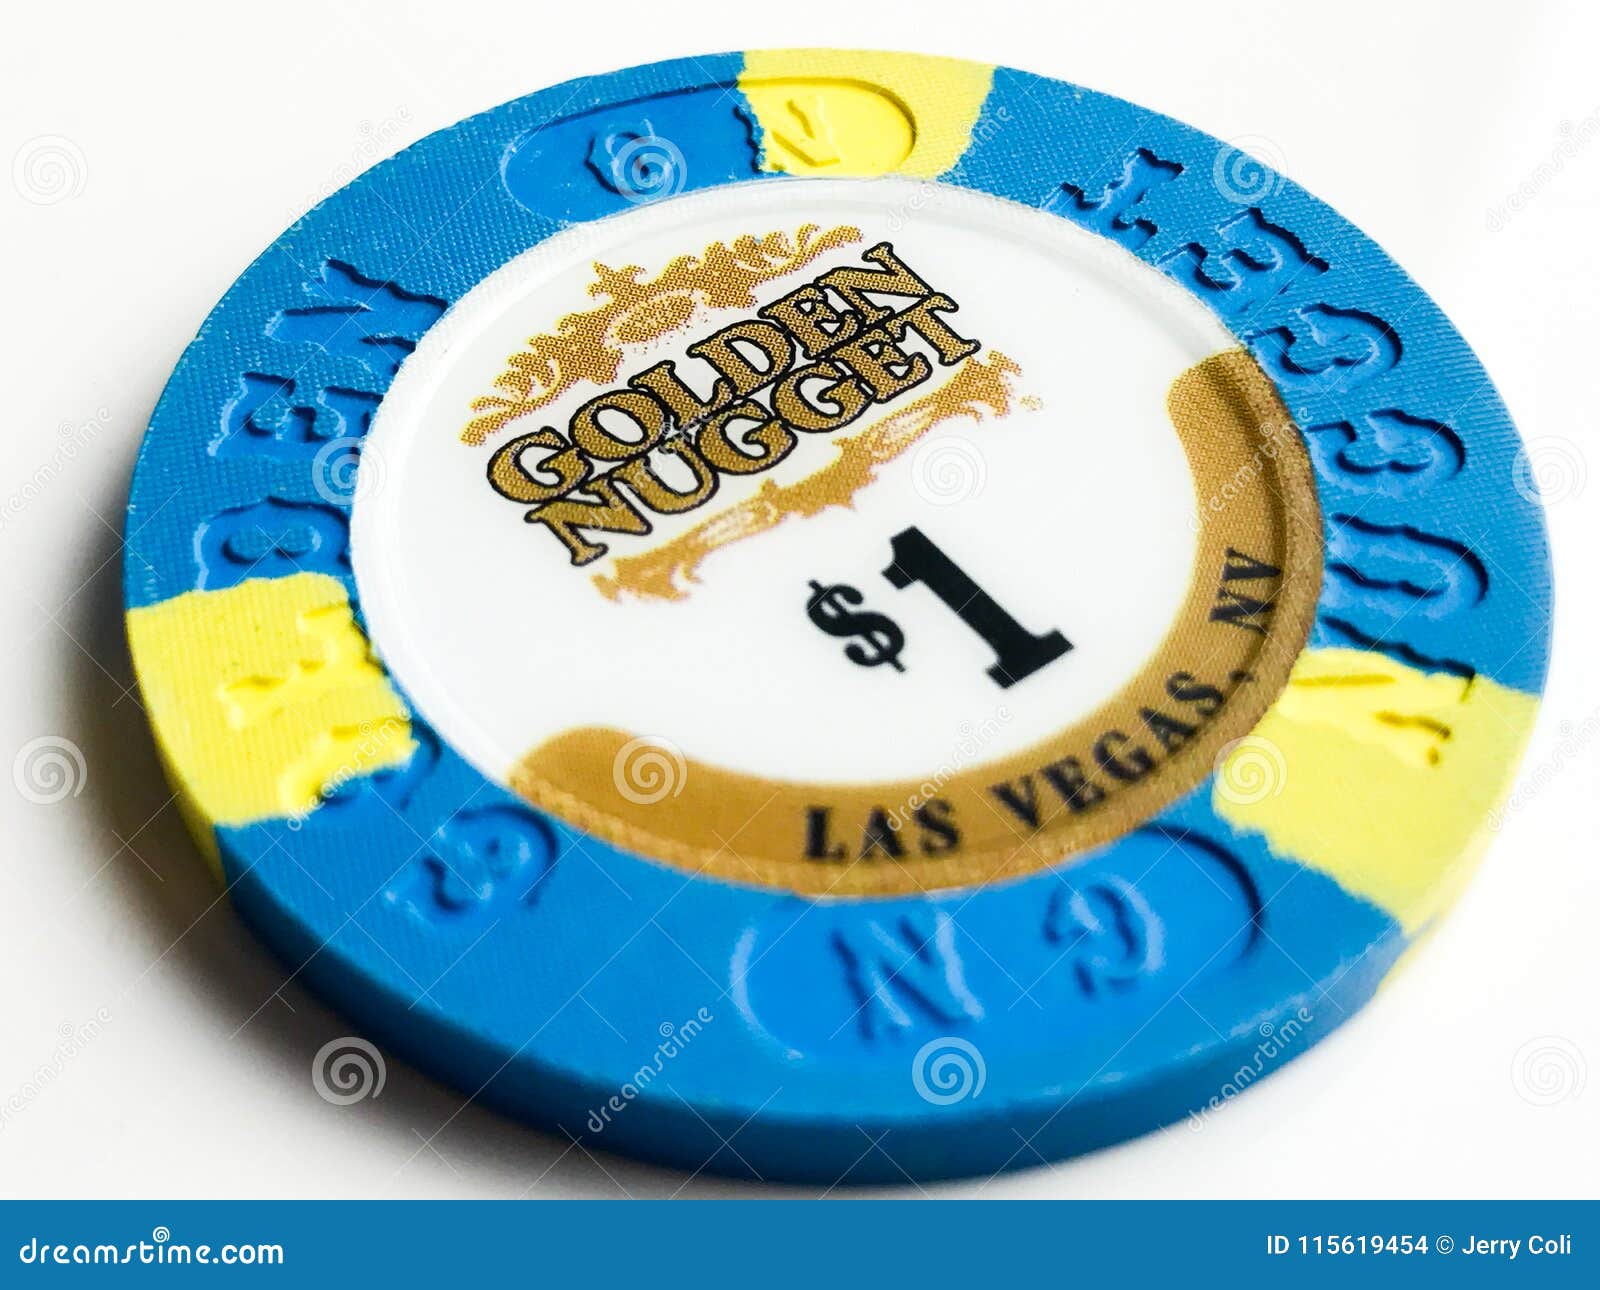 FREE Mystery Poker Chip $1 Golden Nugget Casino Las Vegas NV Nevada 